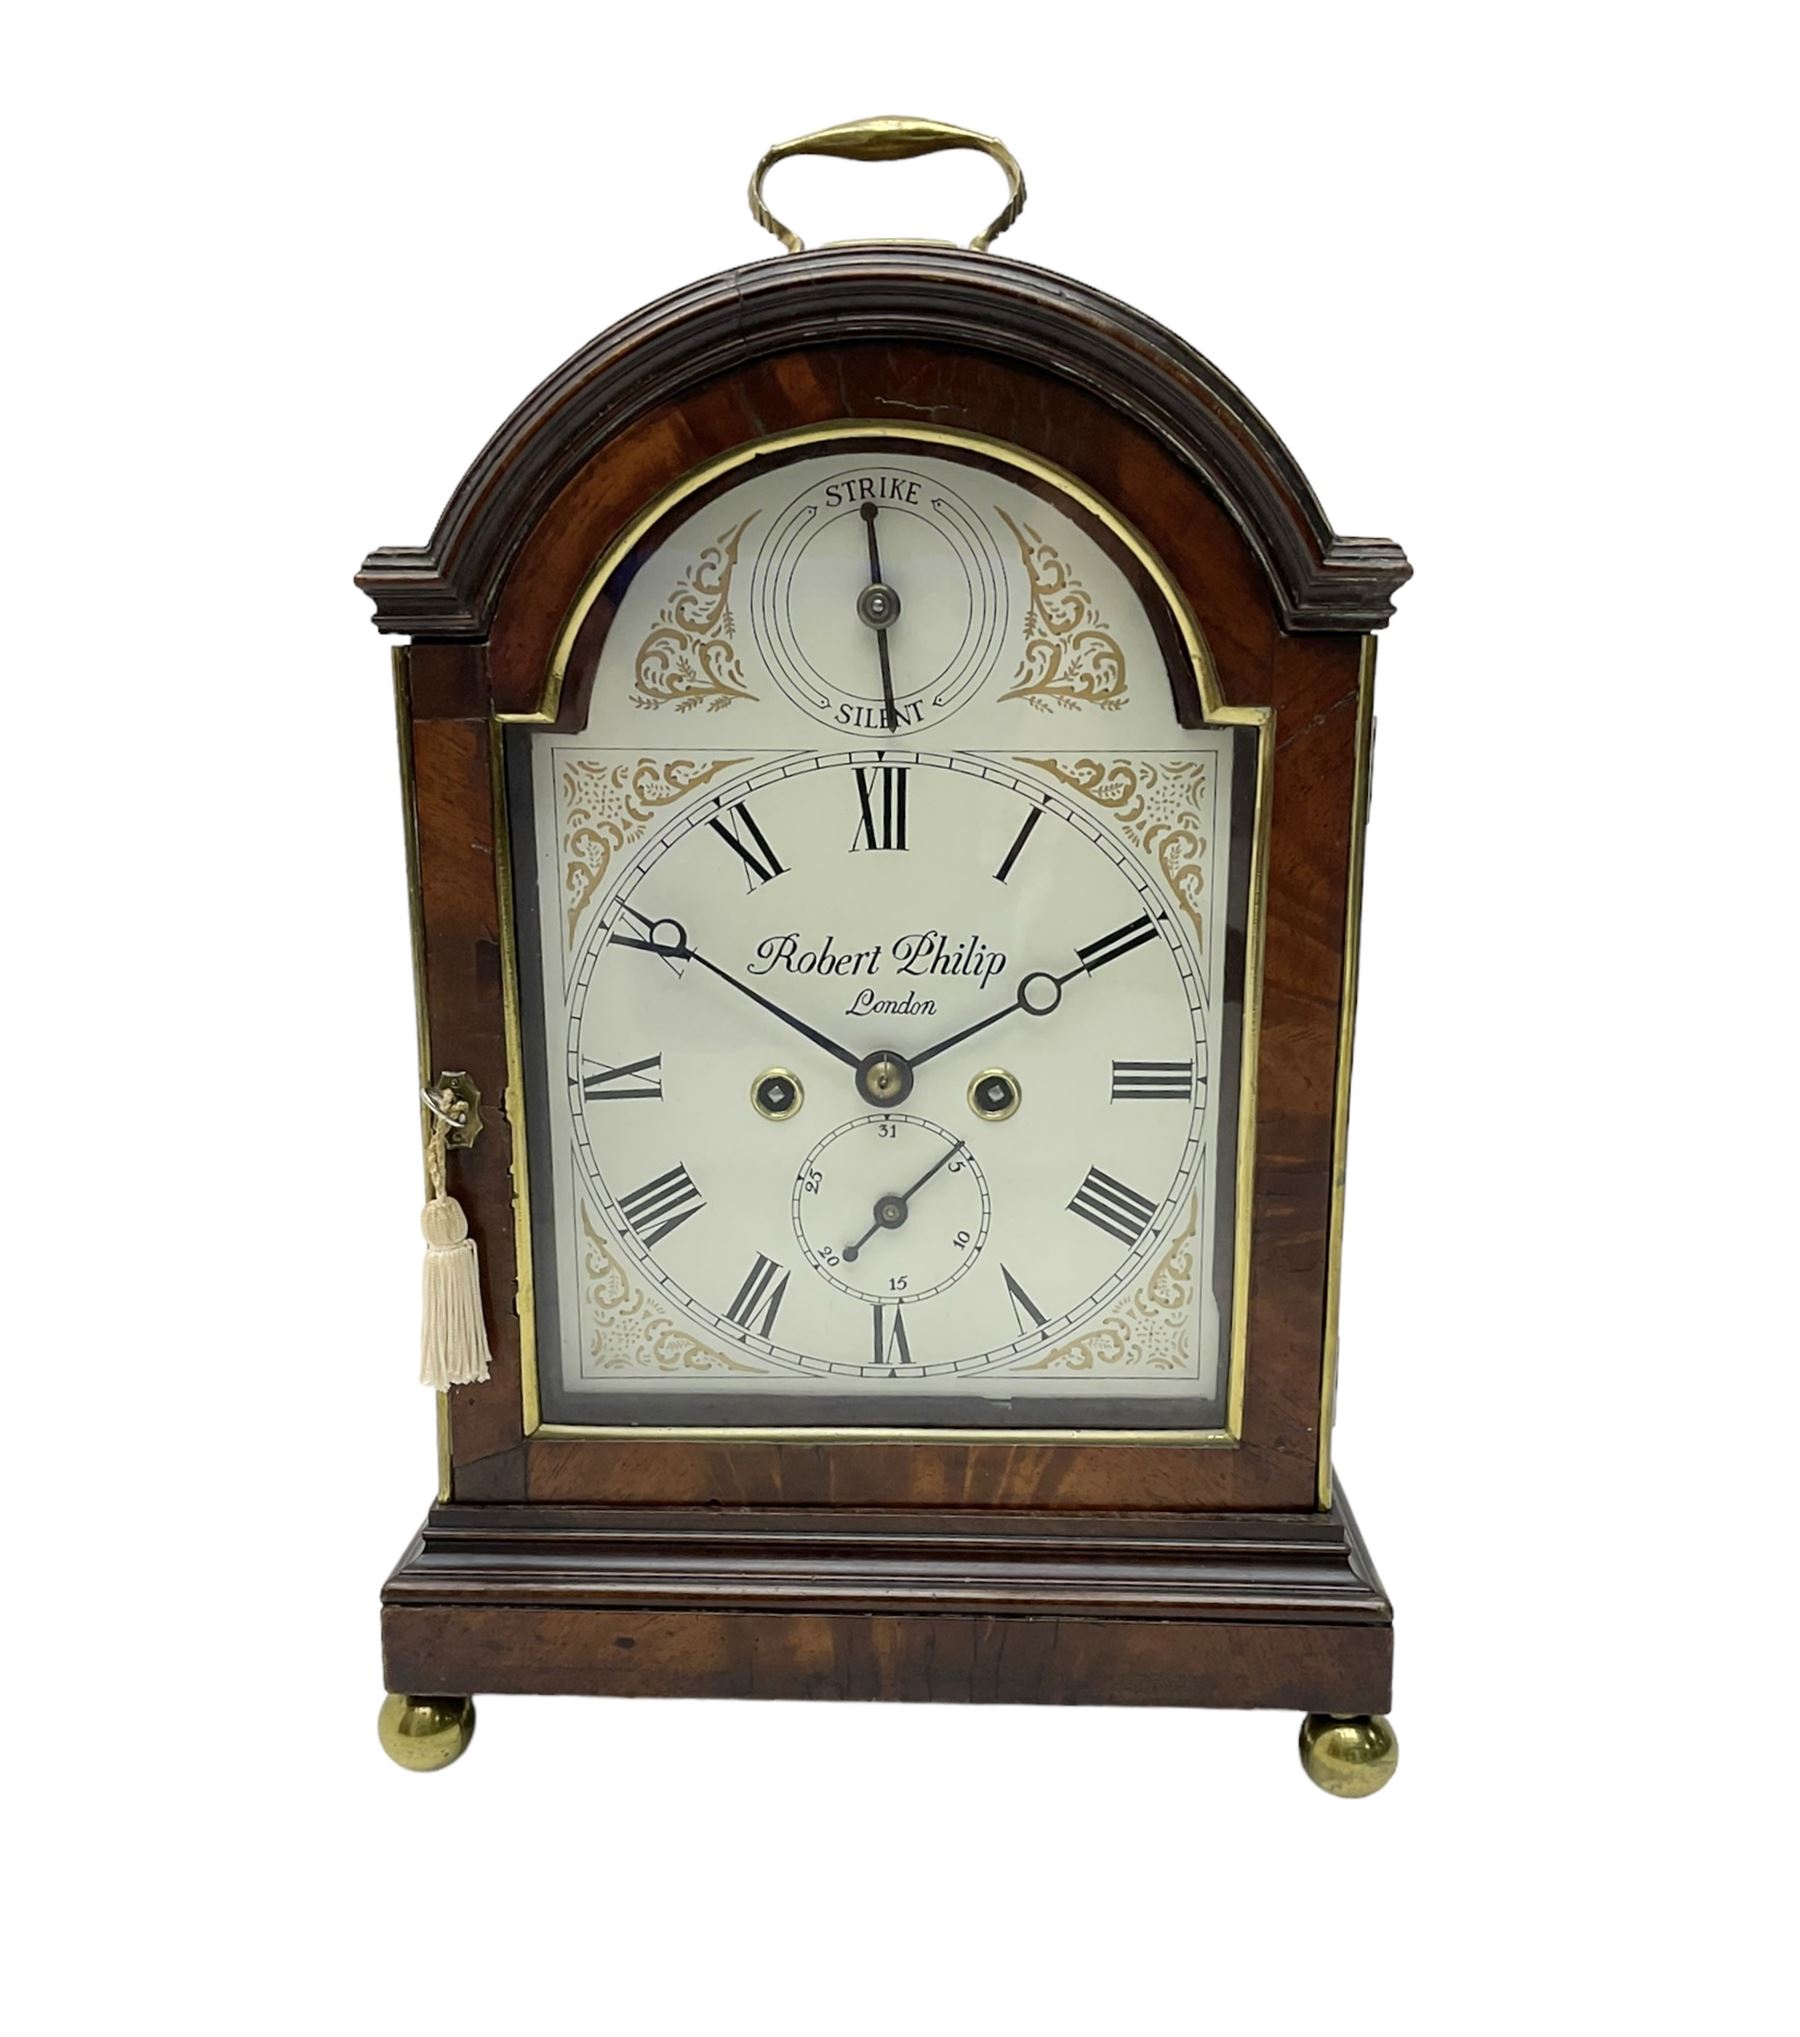 Robert Philip of London - English late 19th century 8-day mahogany cased bracket clock